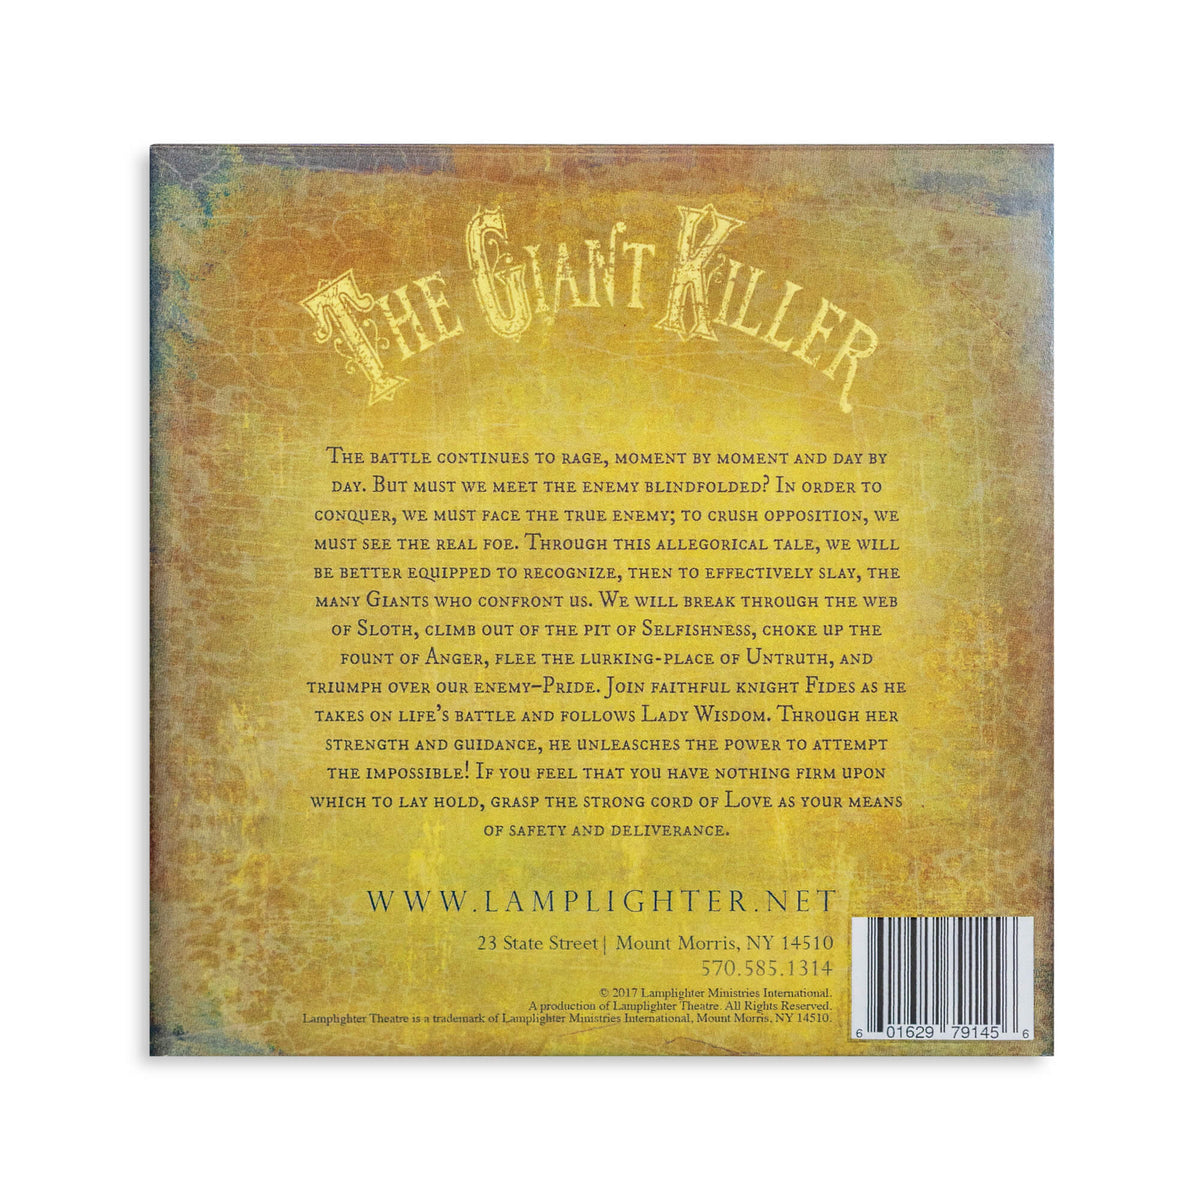 The Giant Killer Audio Drama CD (back)